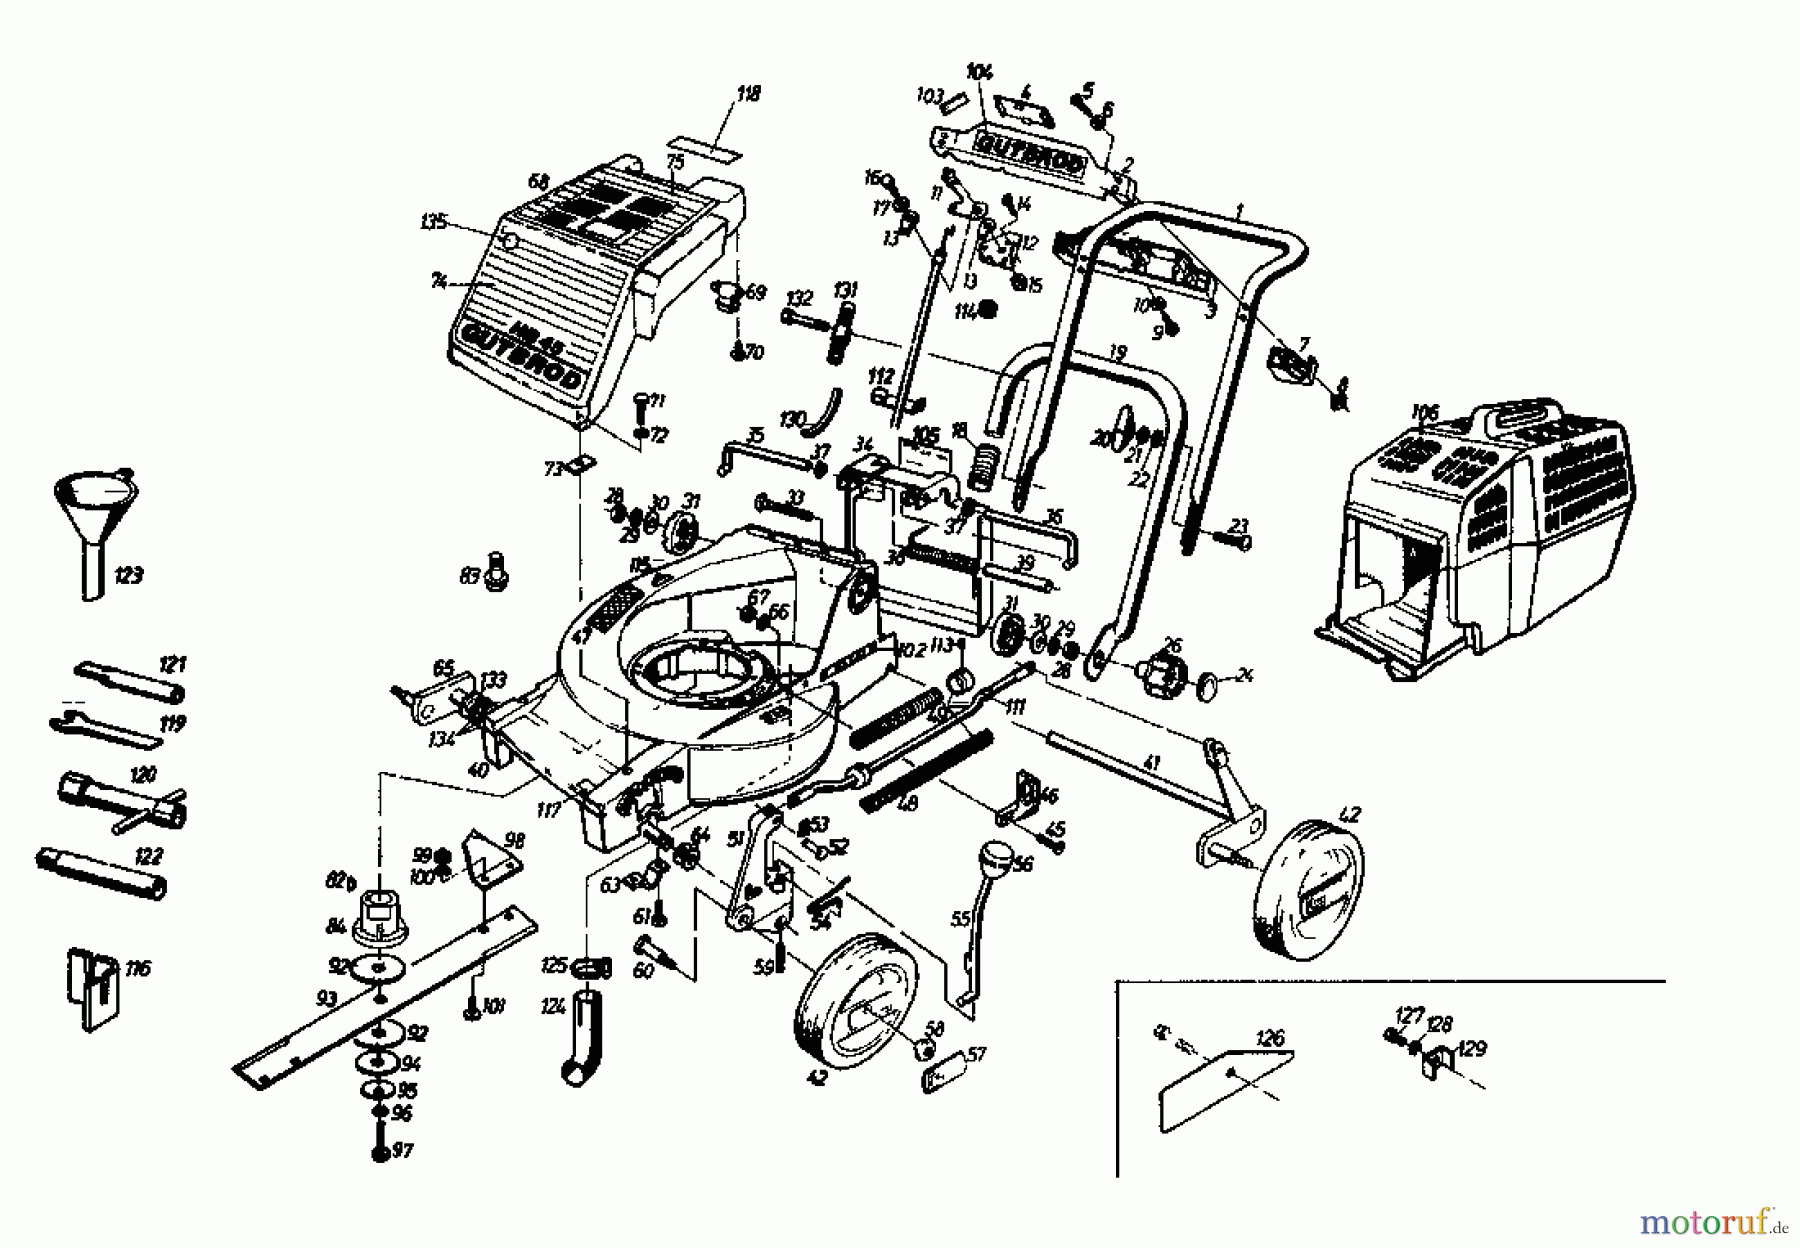  Gutbrod Petrol mower HB 45 02867.04  (1987) Basic machine